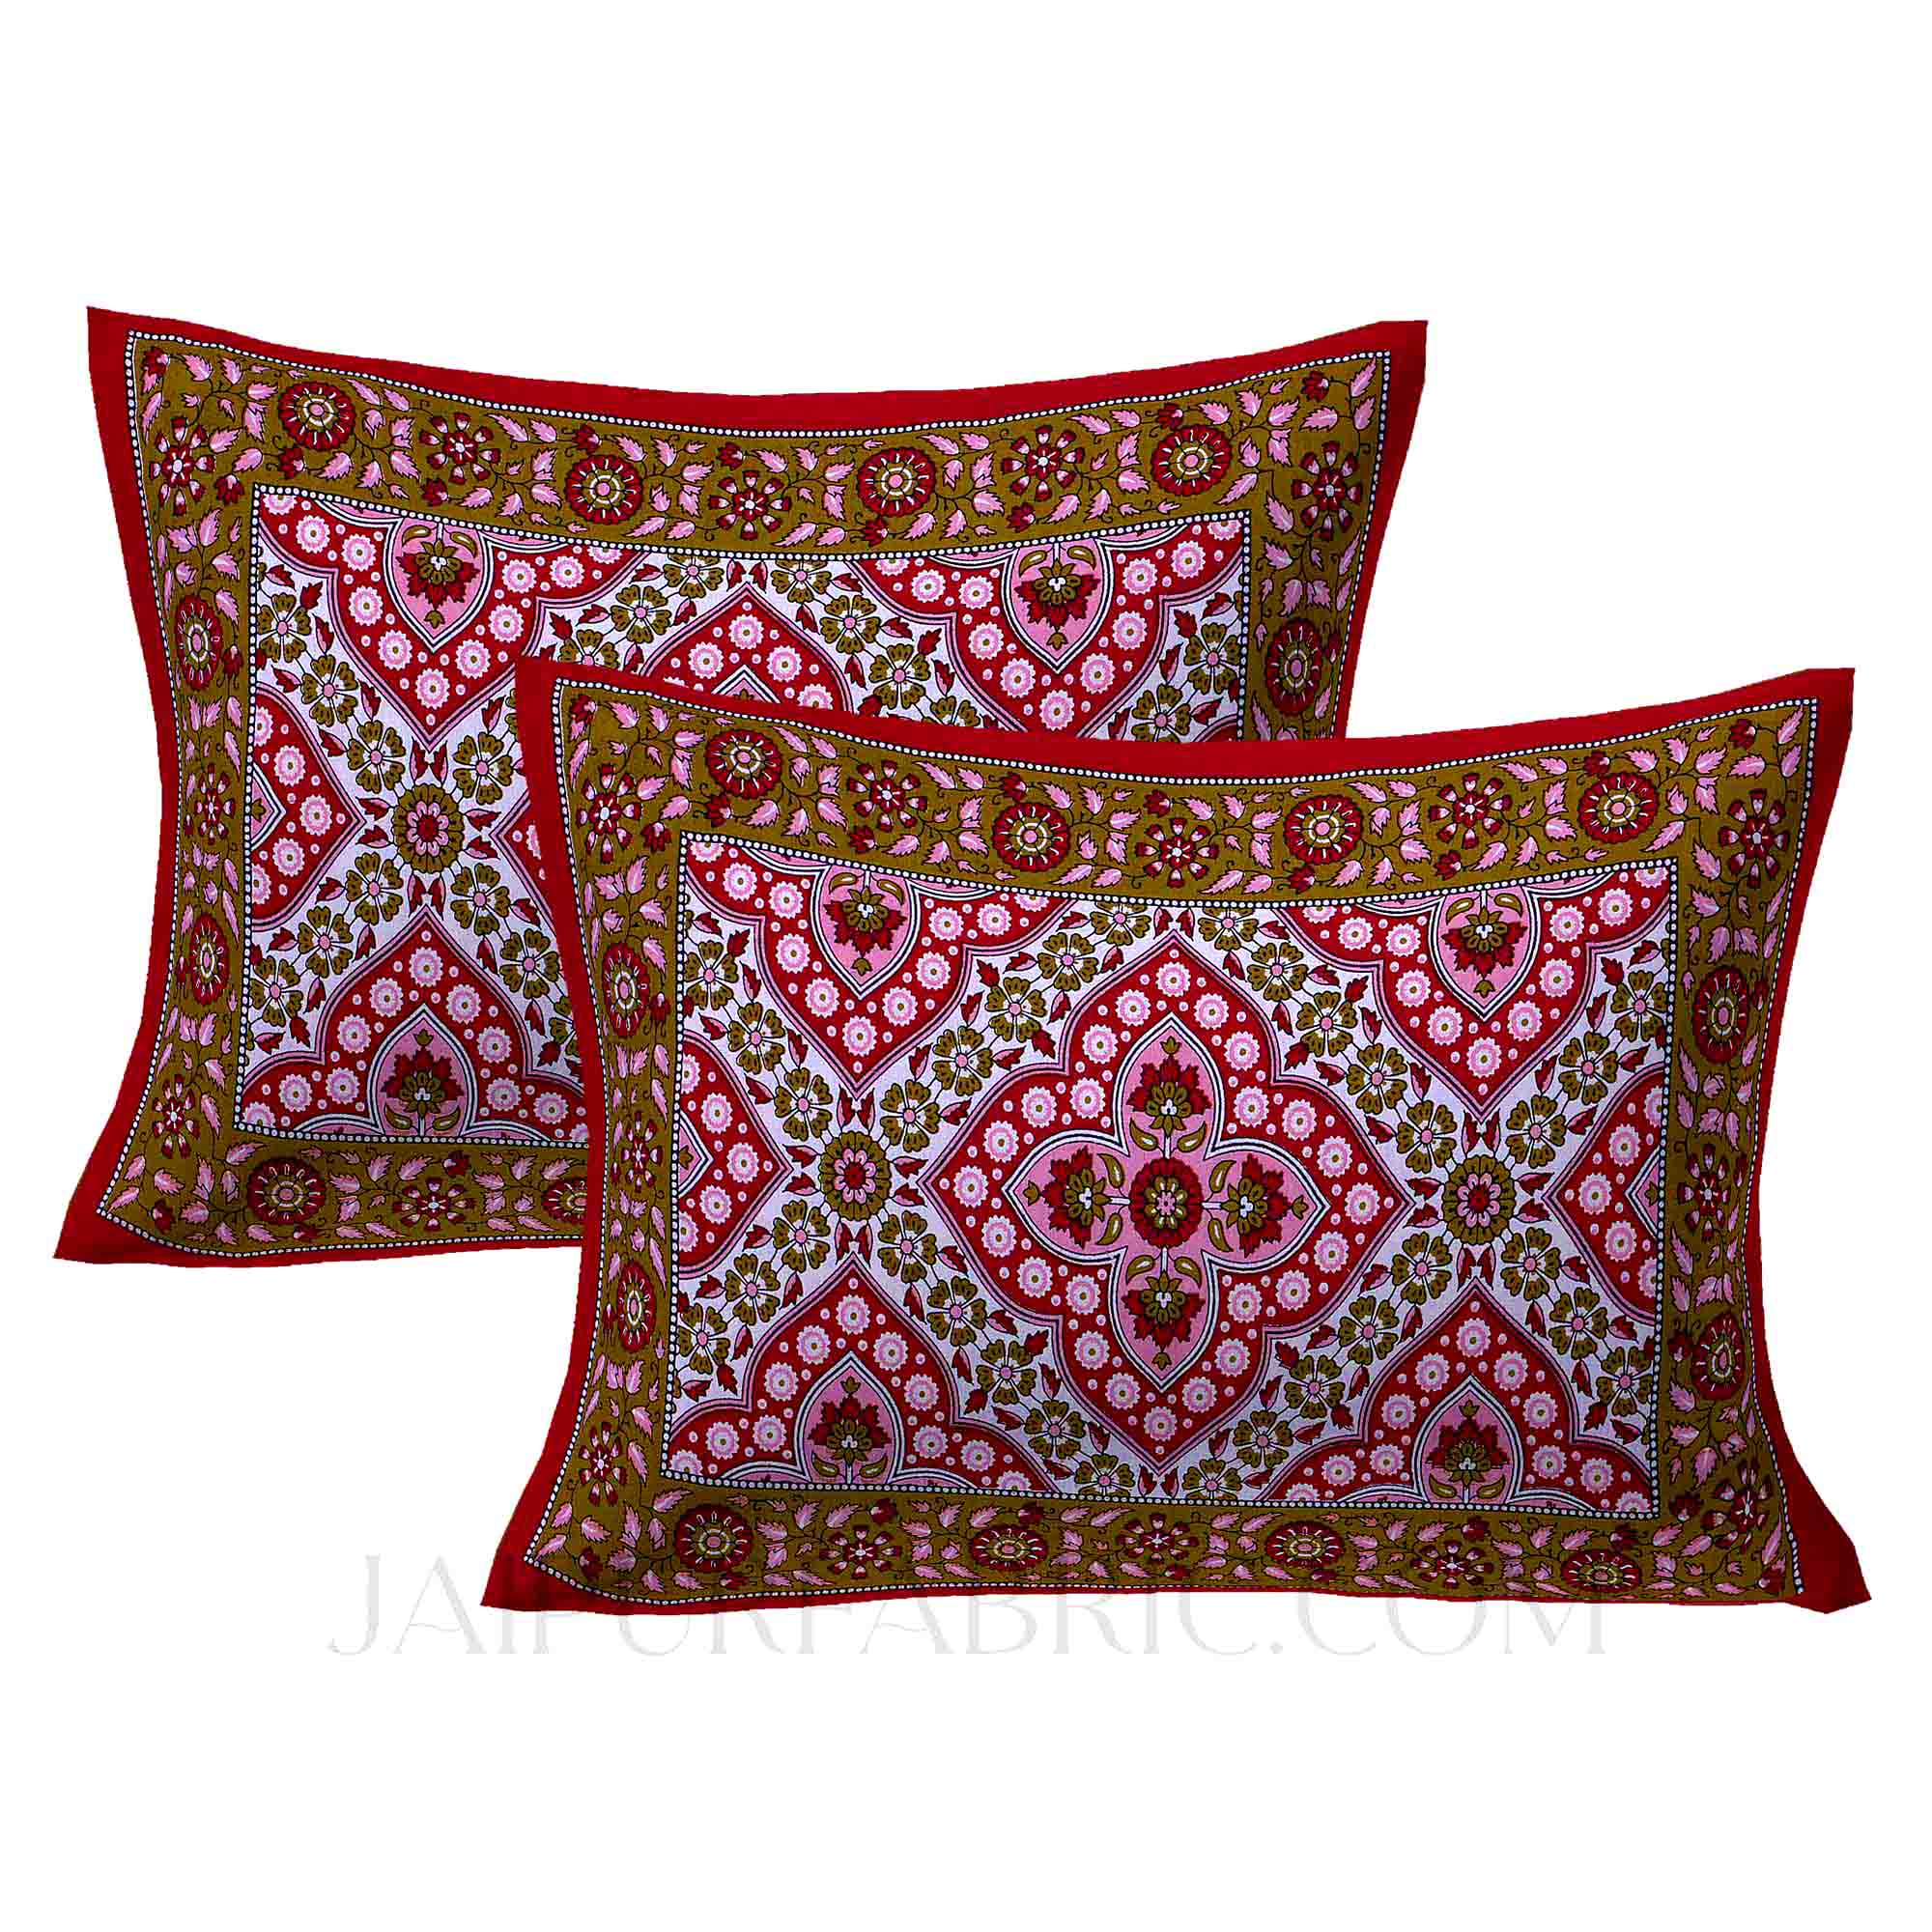 Red Kalamkari Double Bedsheet